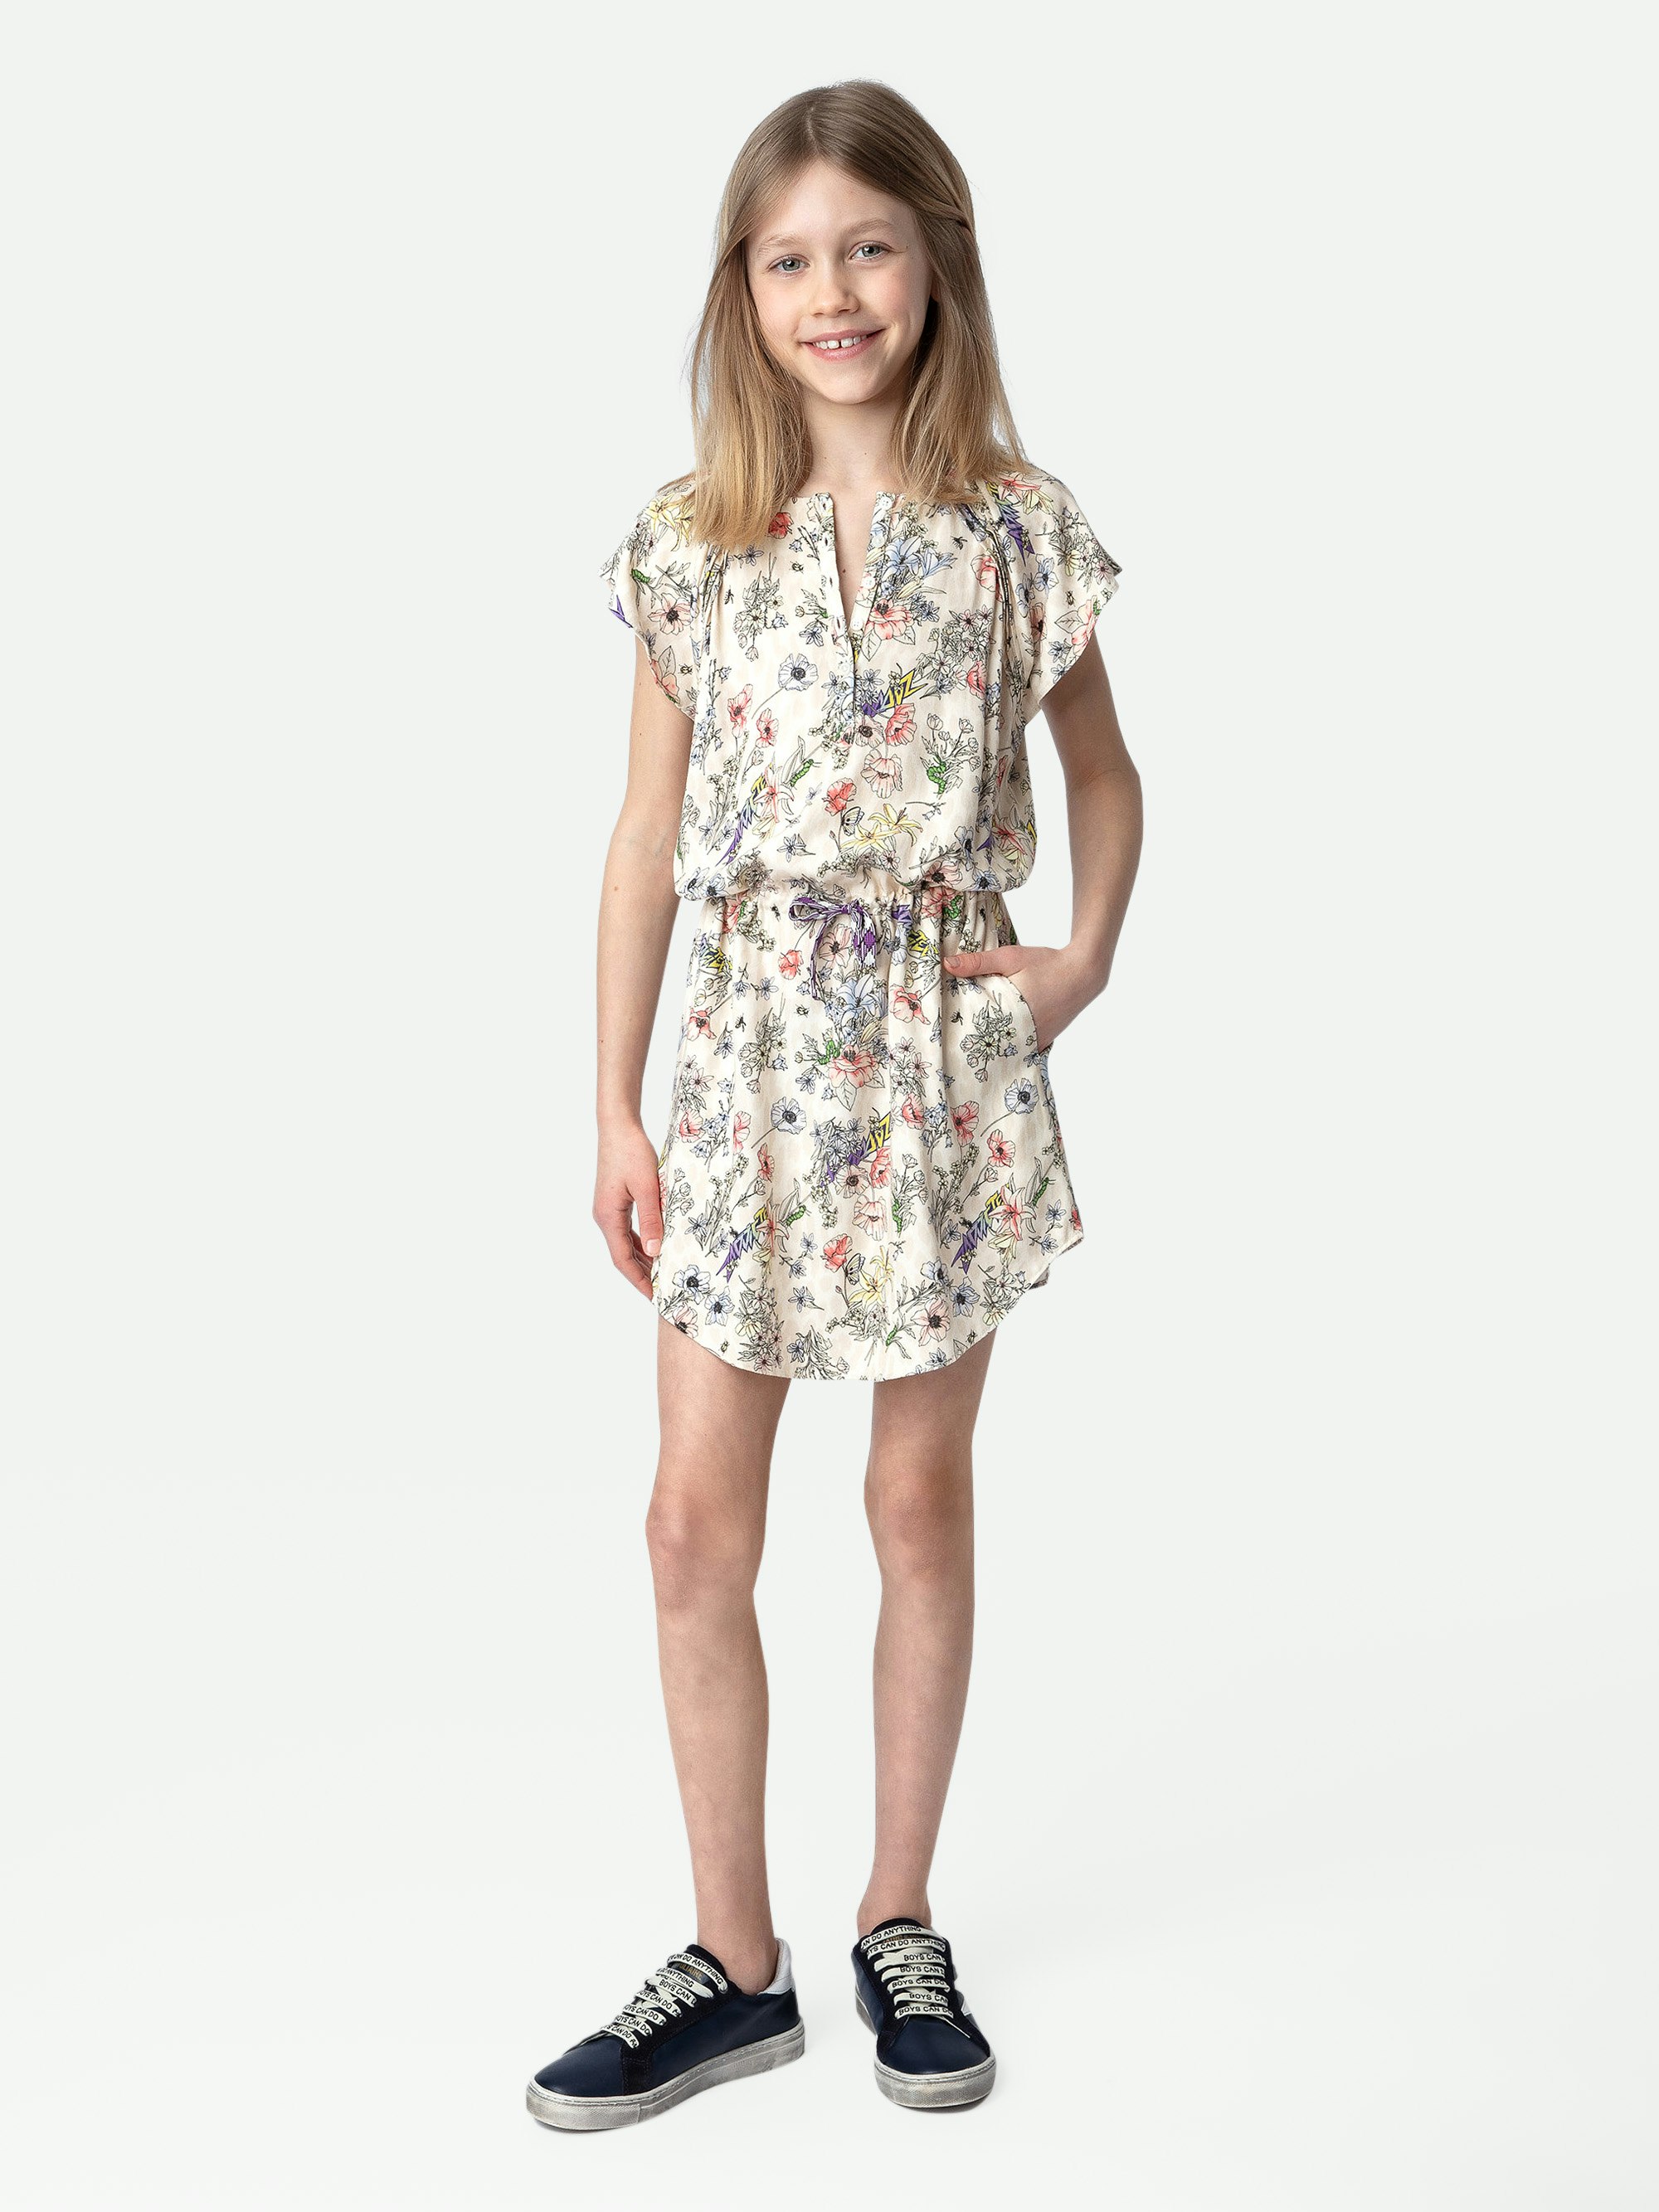 Karolina Girls’ Dress - Girls’ multicoloured floral-print dress.